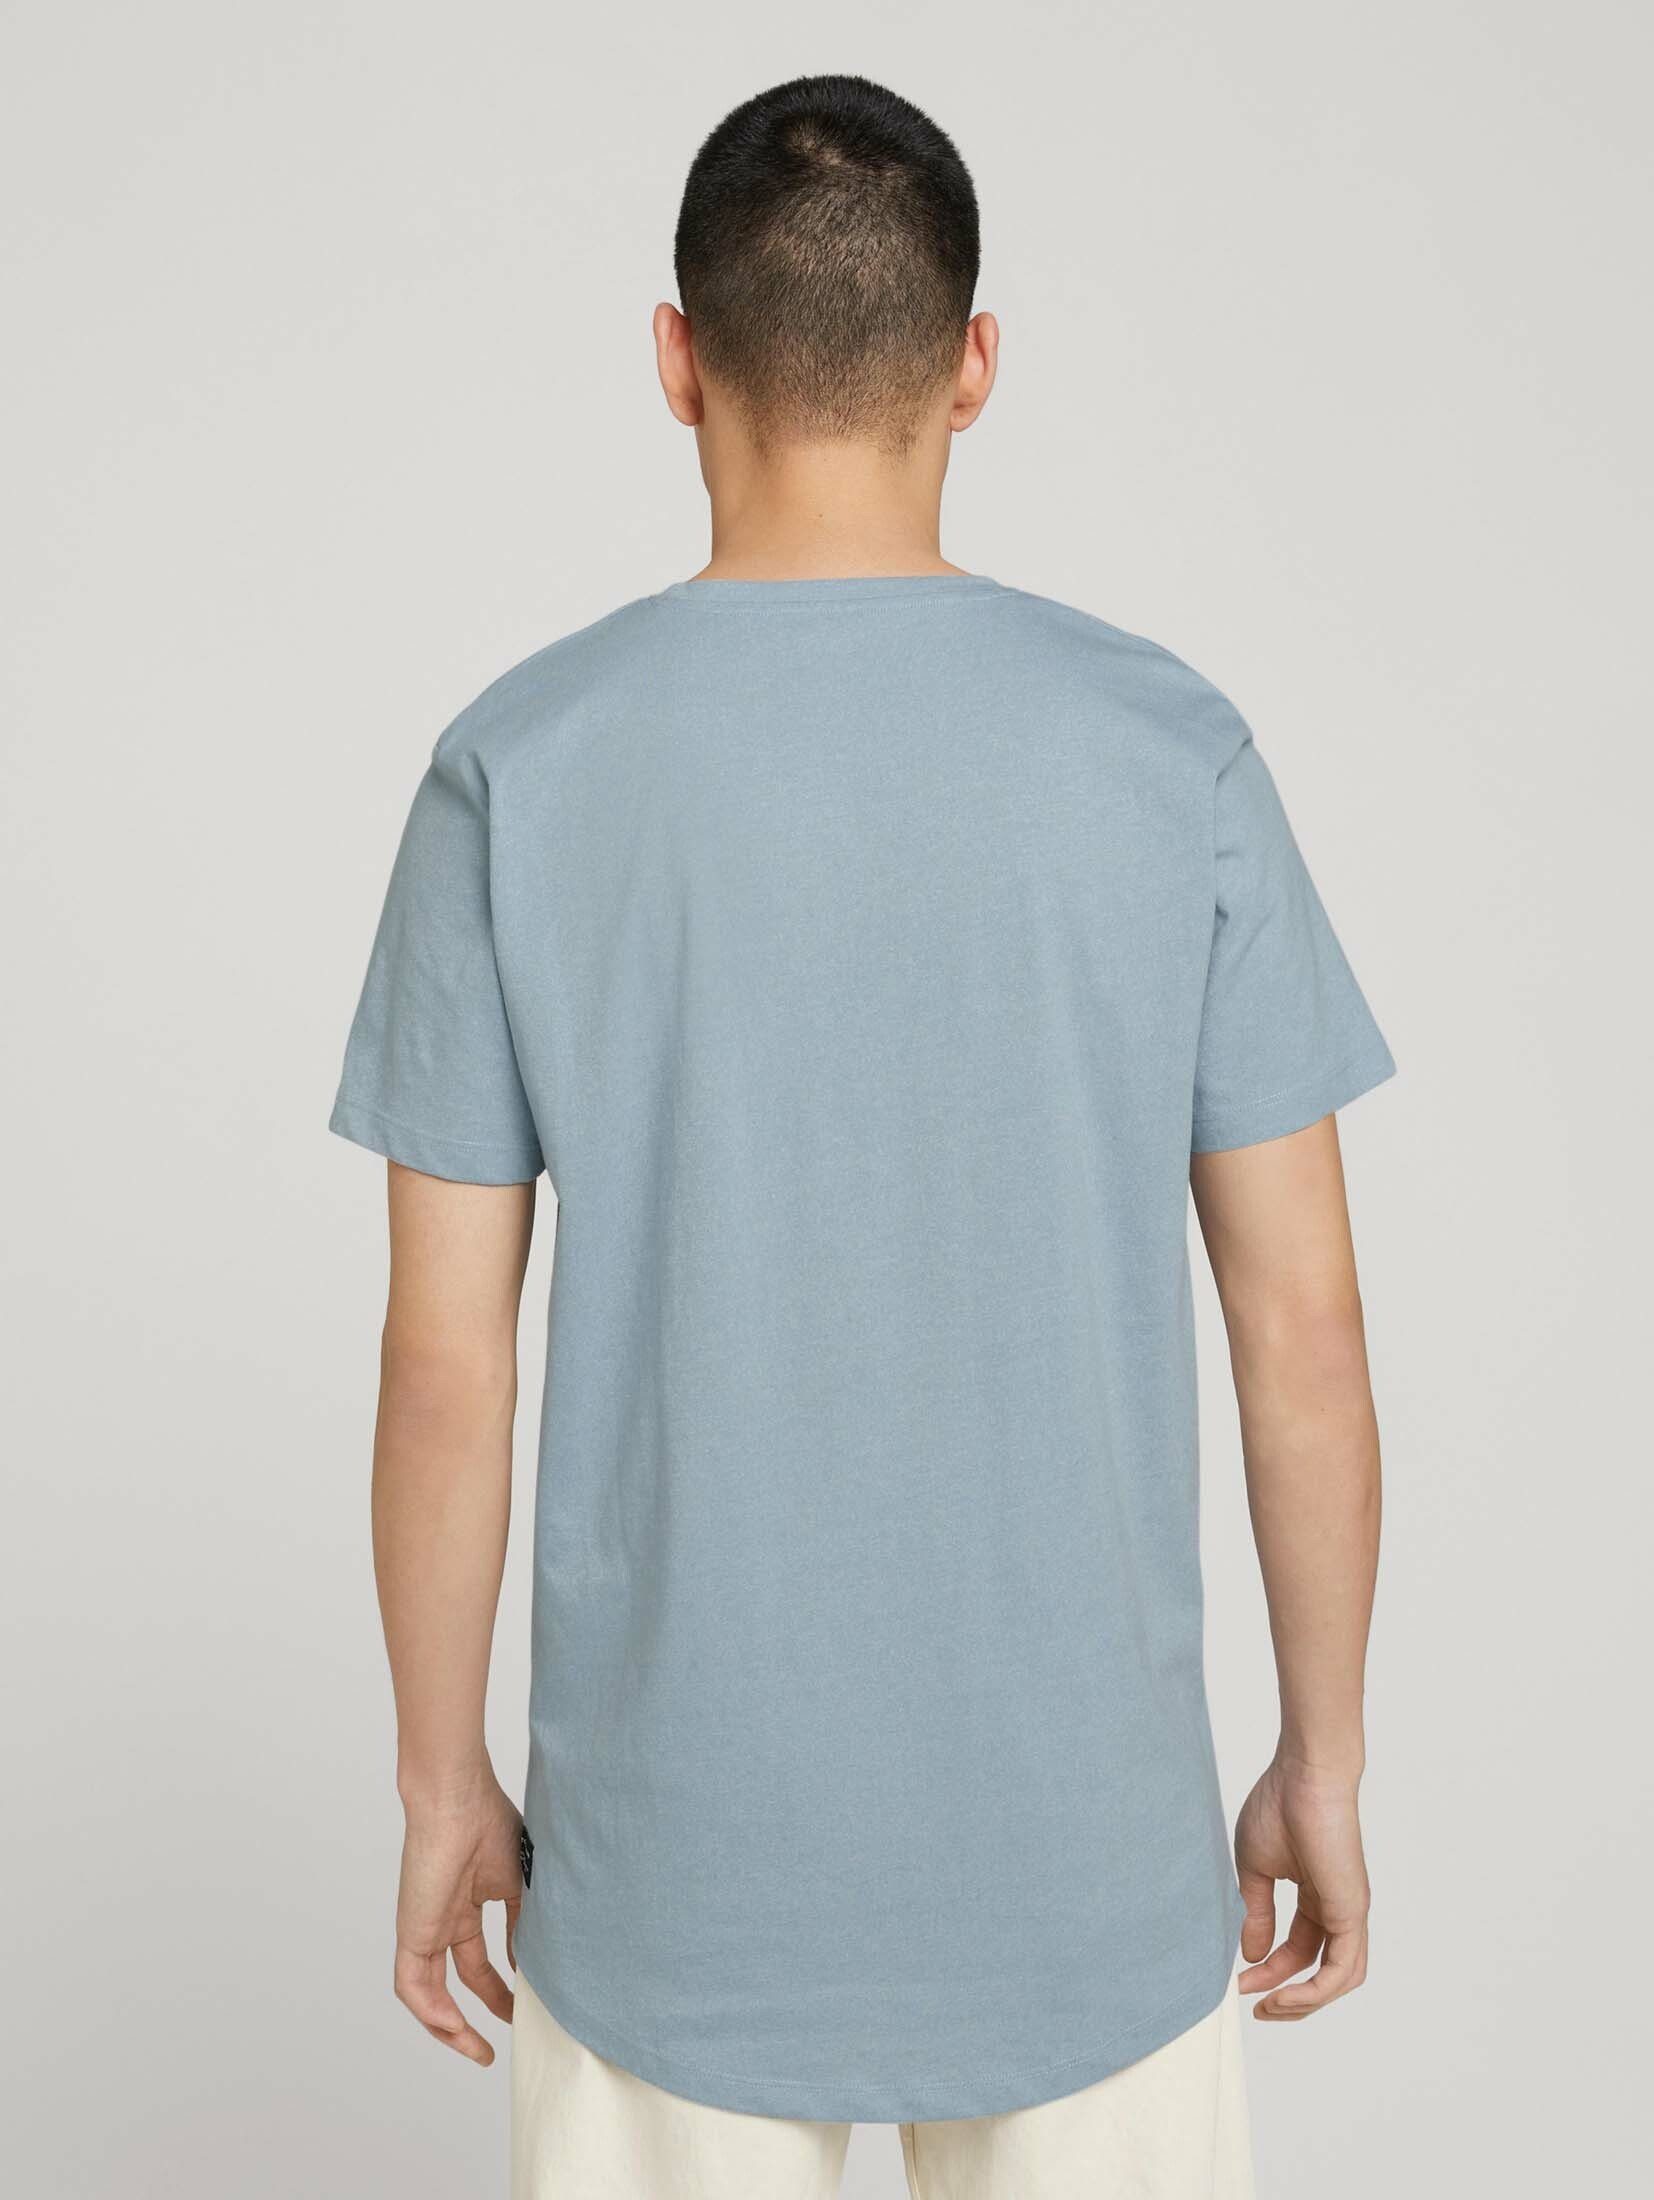 TOM TAILOR Denim T-Shirt melange blue mit Saum abgerundetem foggy T-Shirt